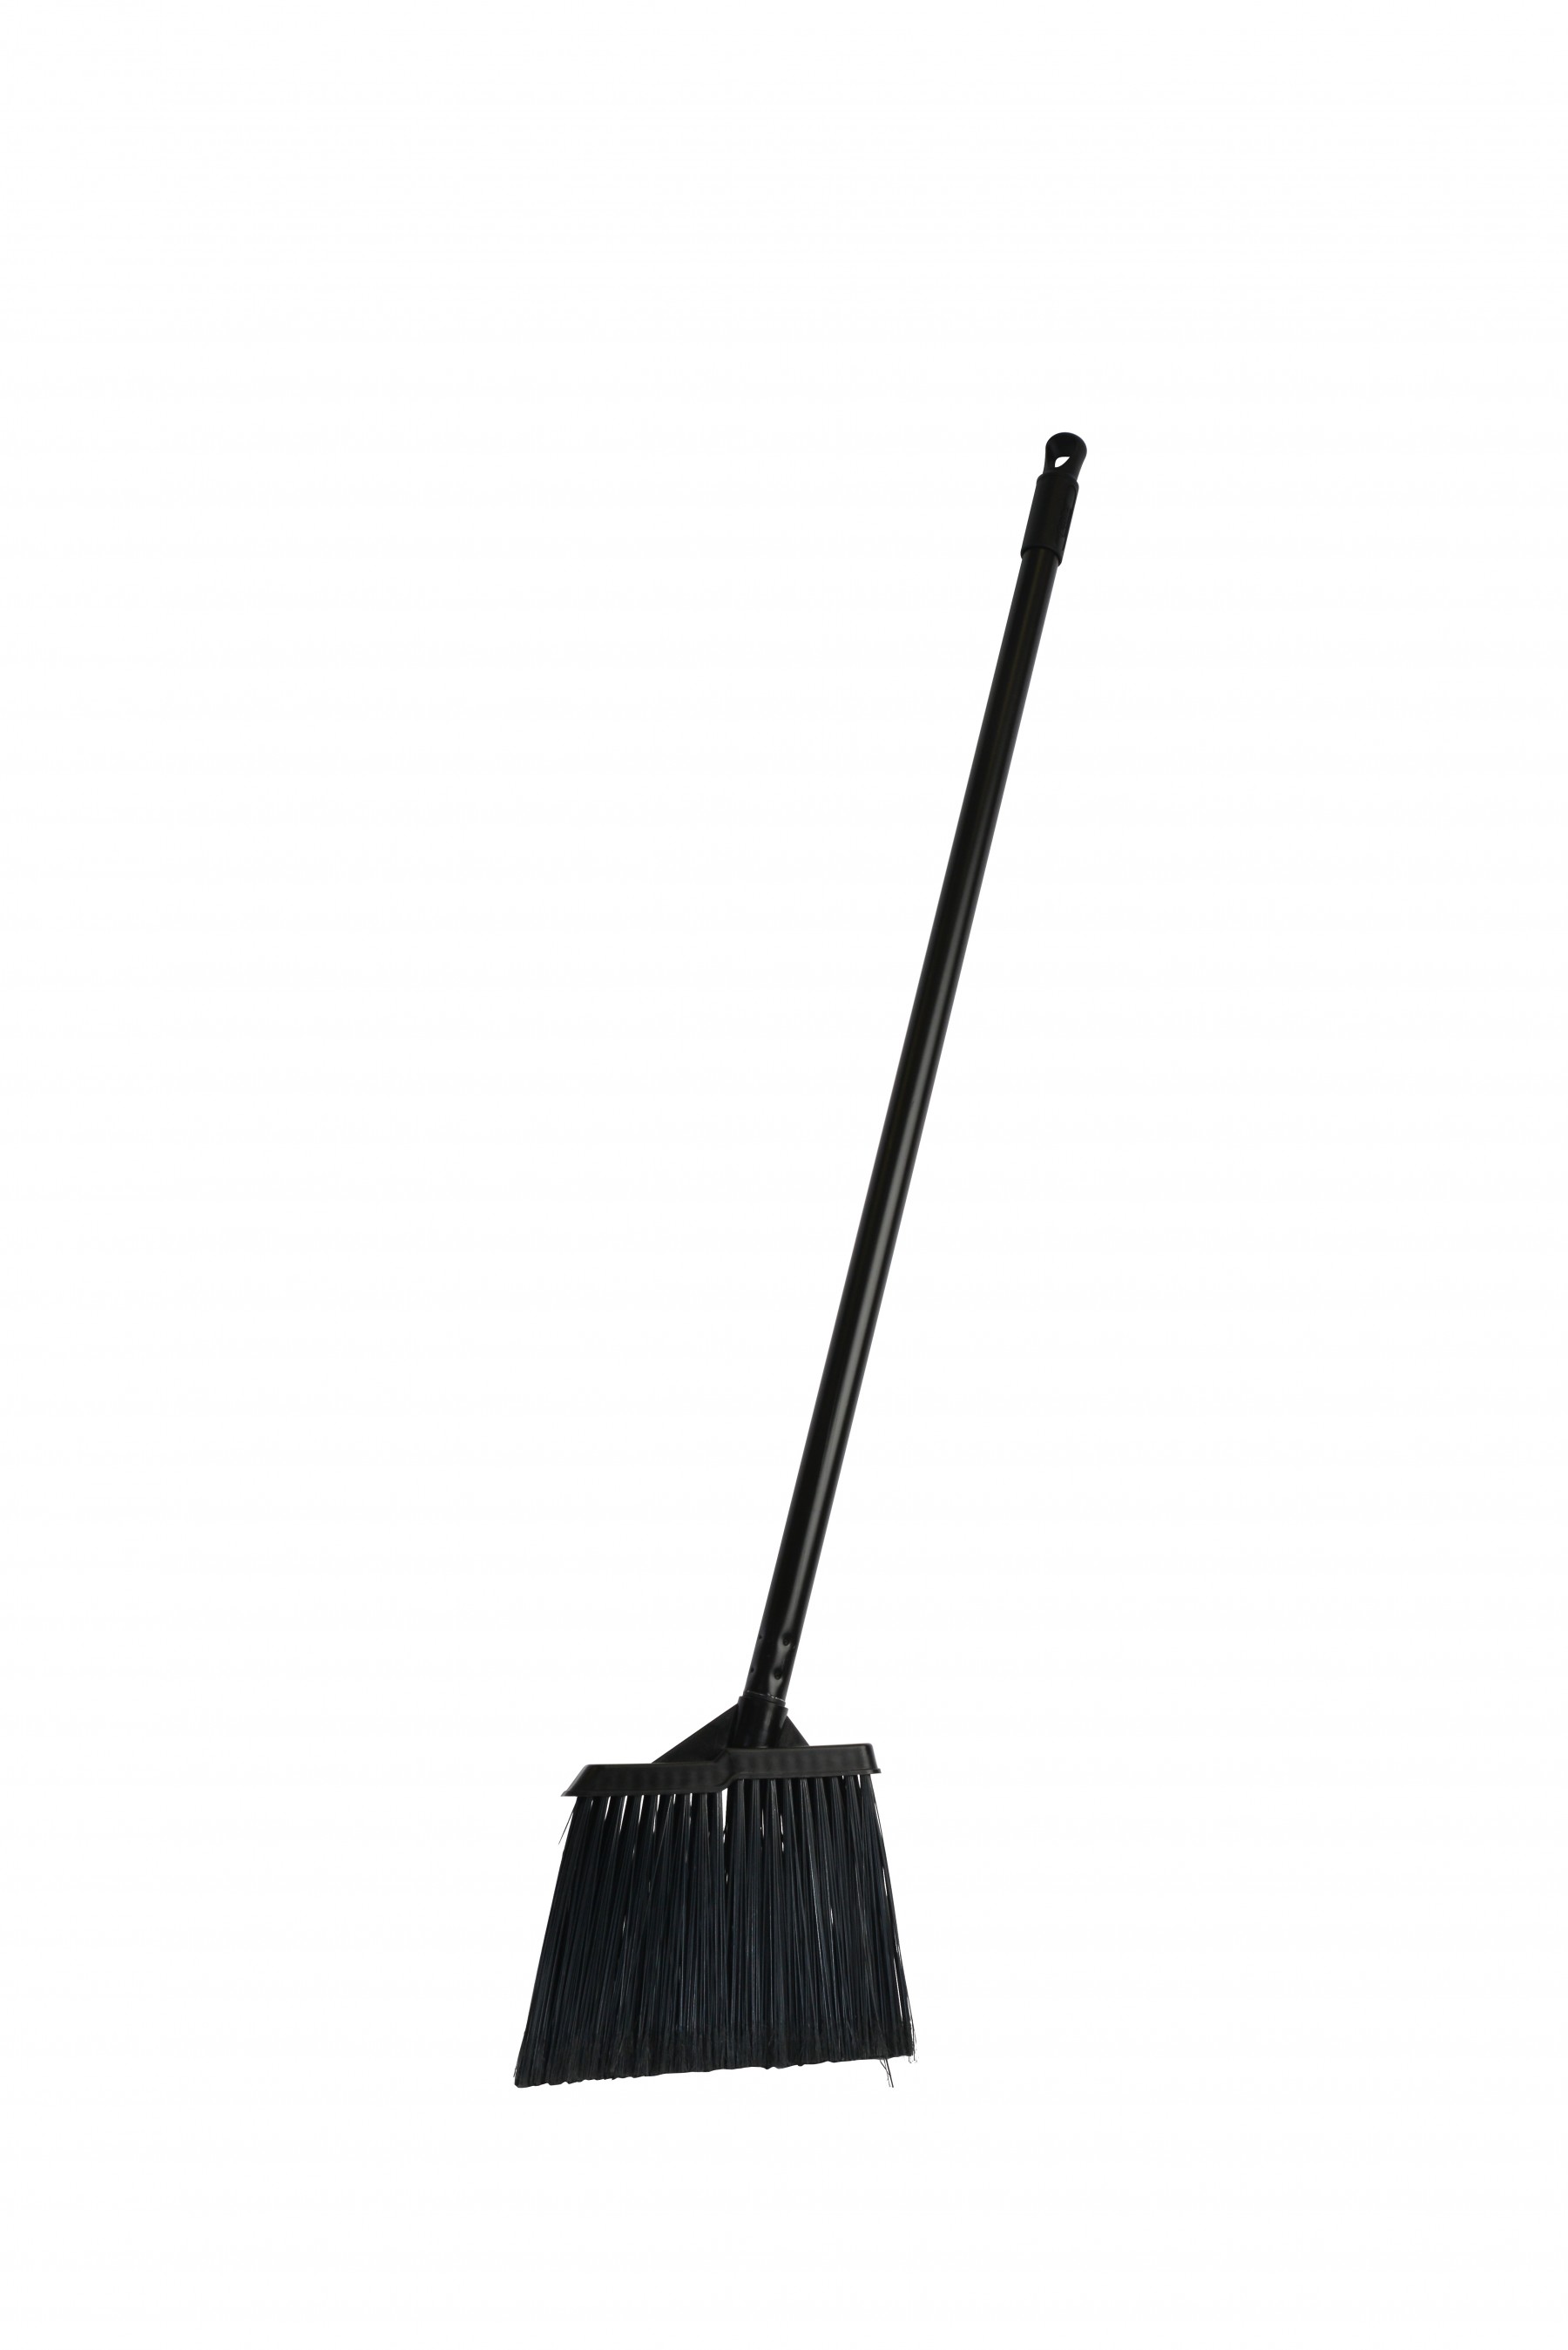 Basics Short Lobby Angle Broom 6-Pack 345-5B Black